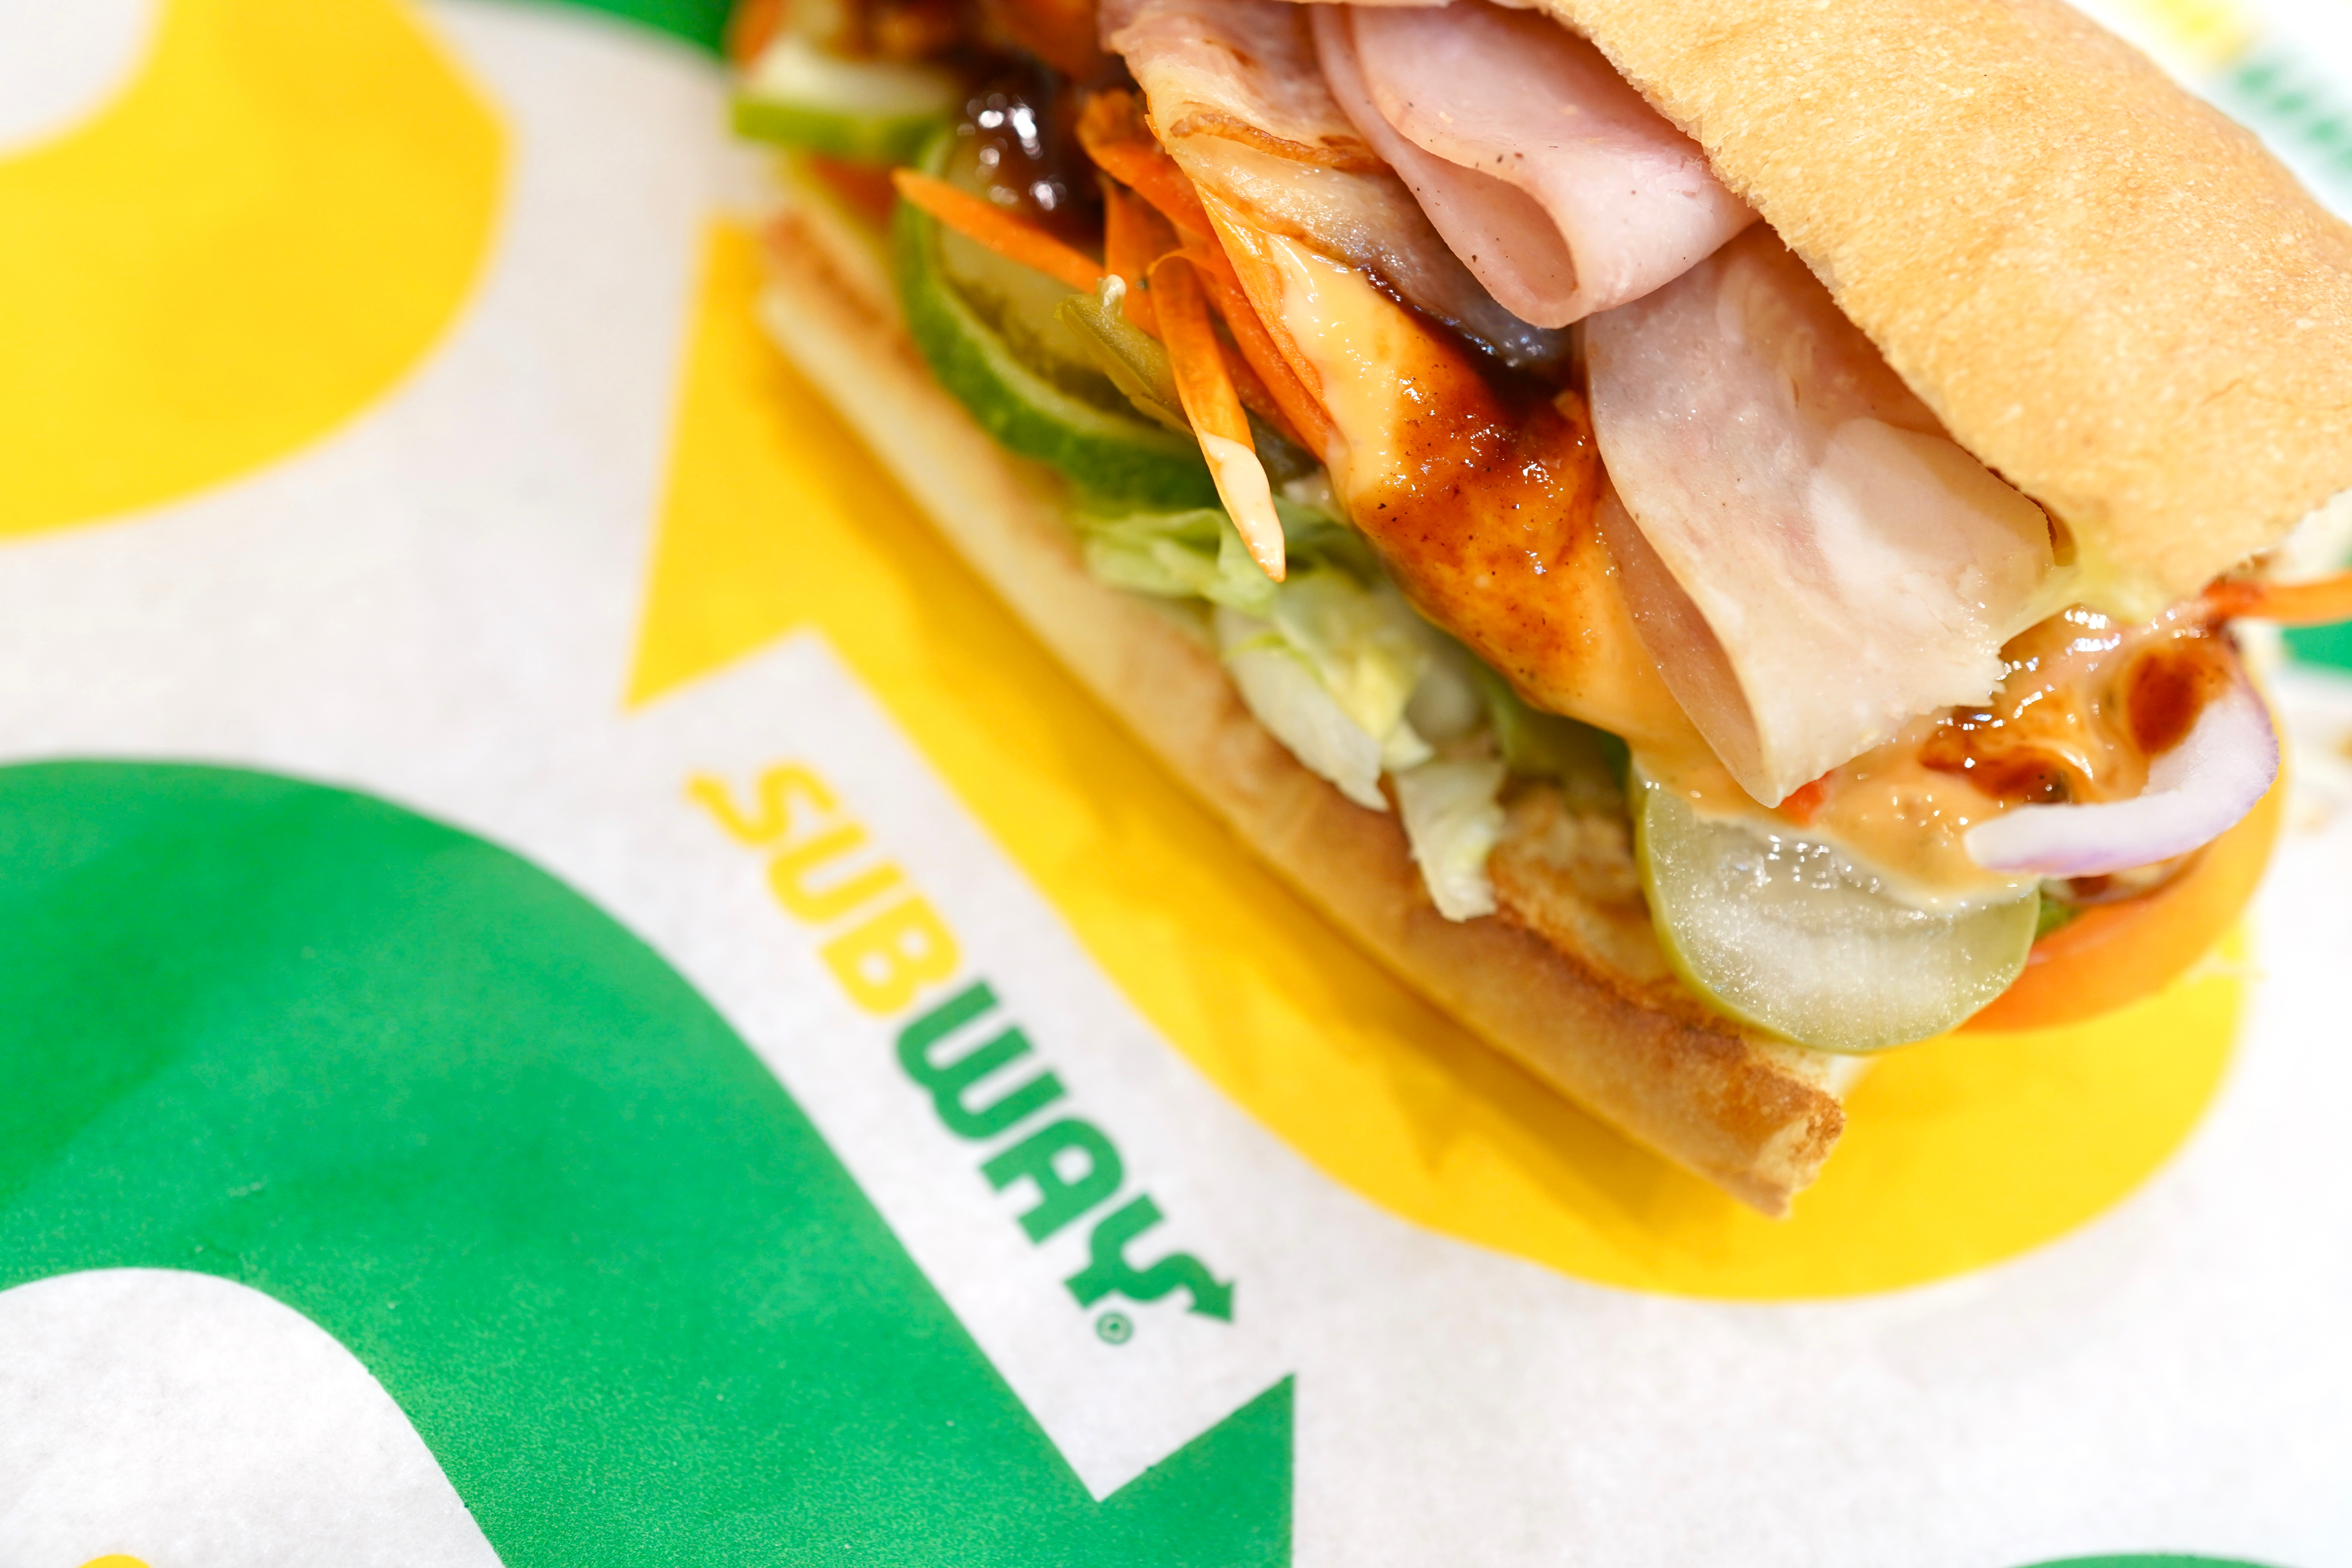 a Subway sandwich